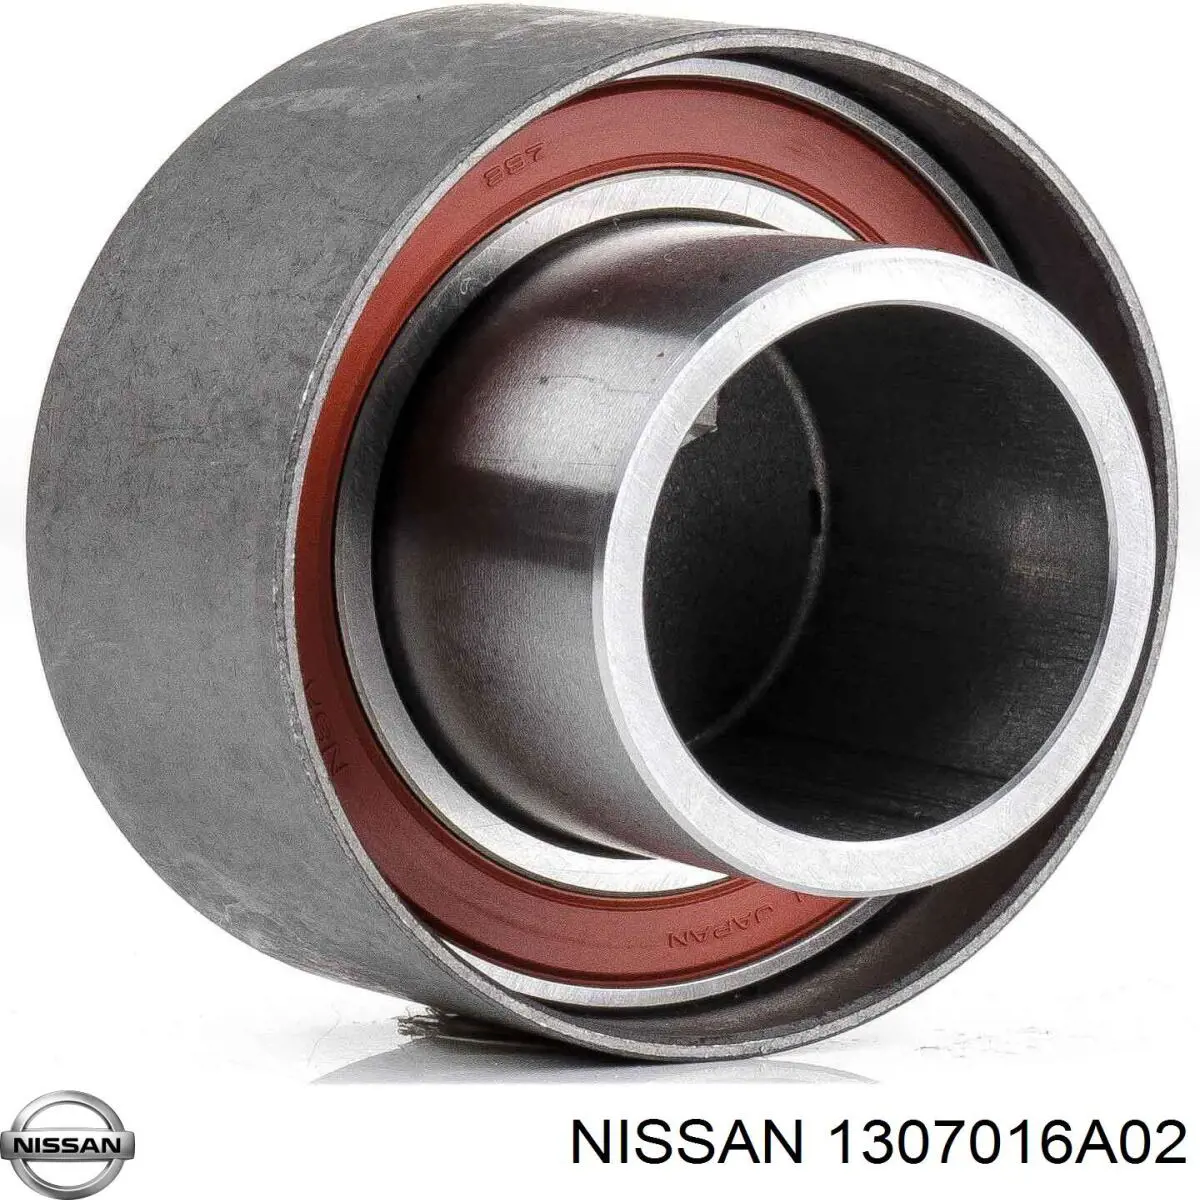 1307016A02 Nissan ролик грм